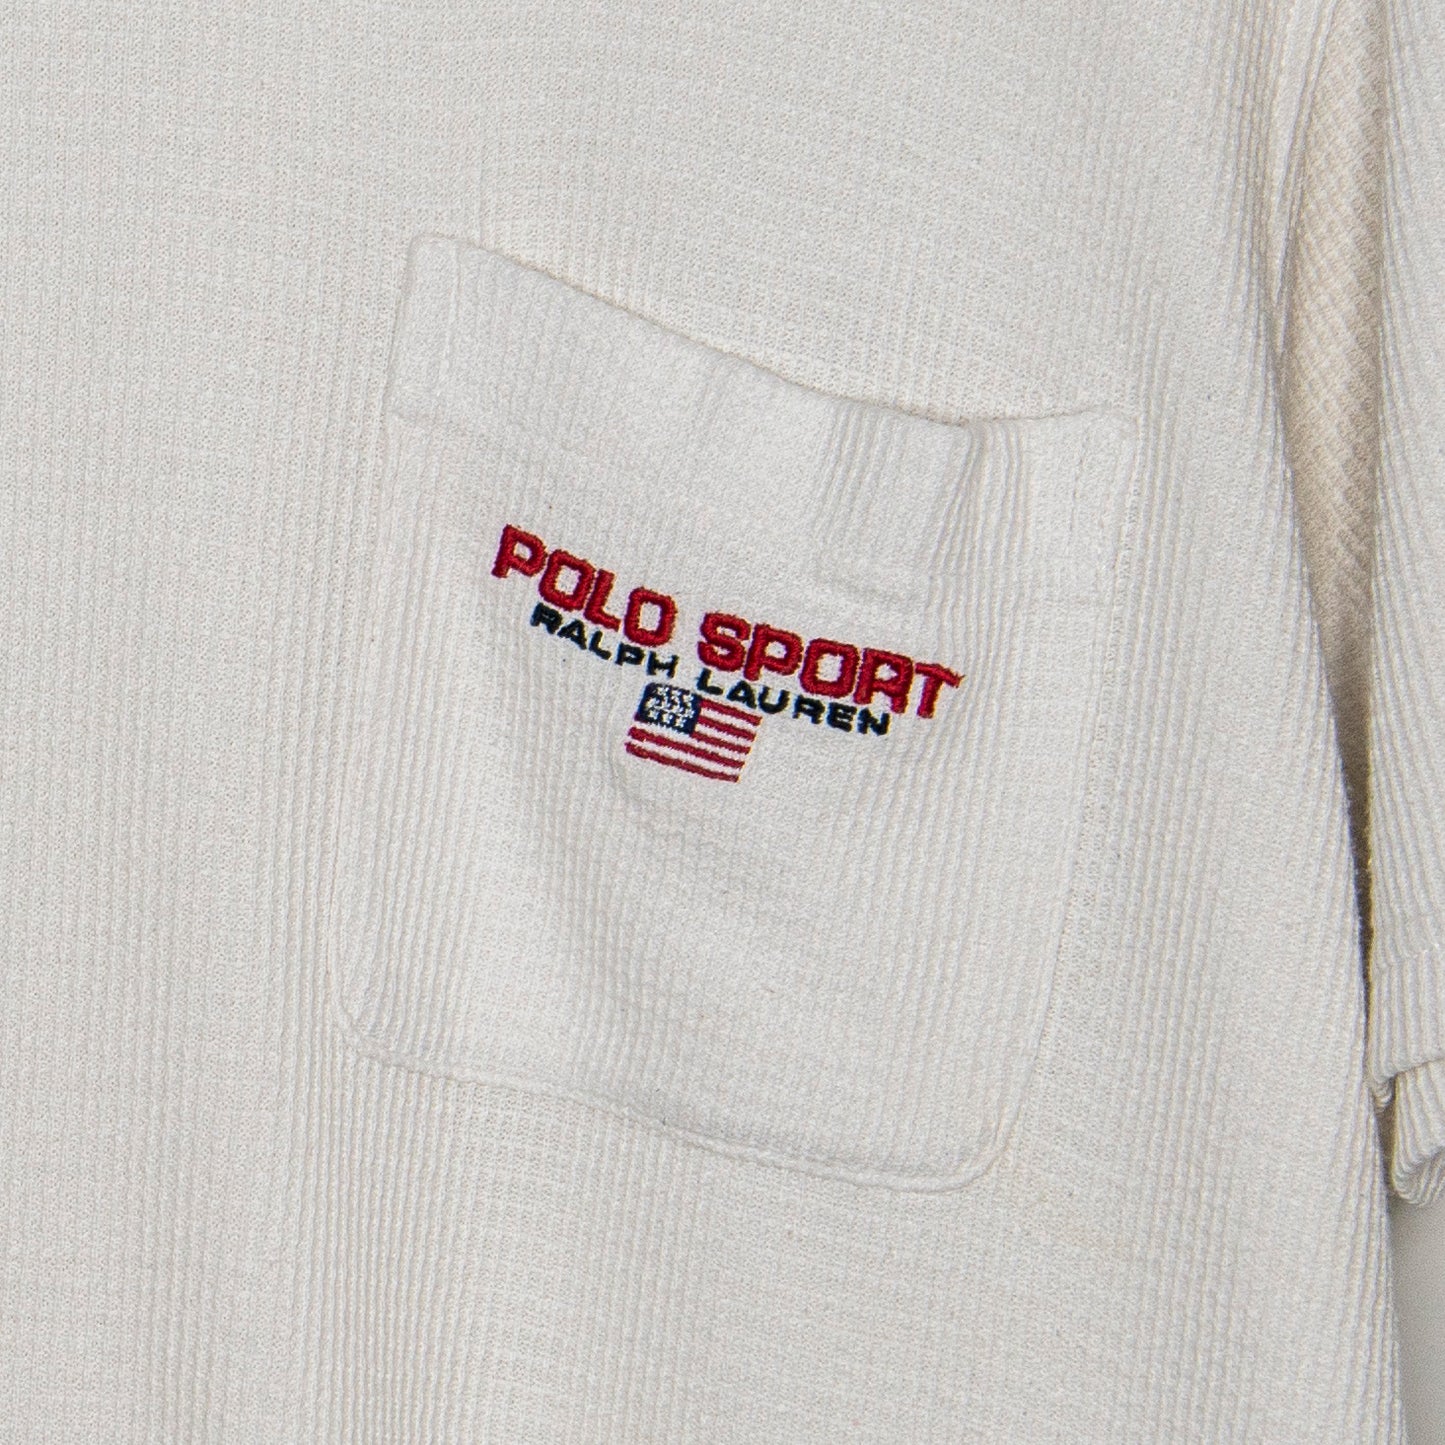 Vintage Polo Sport Thermal Pocket T-Shirt Medium